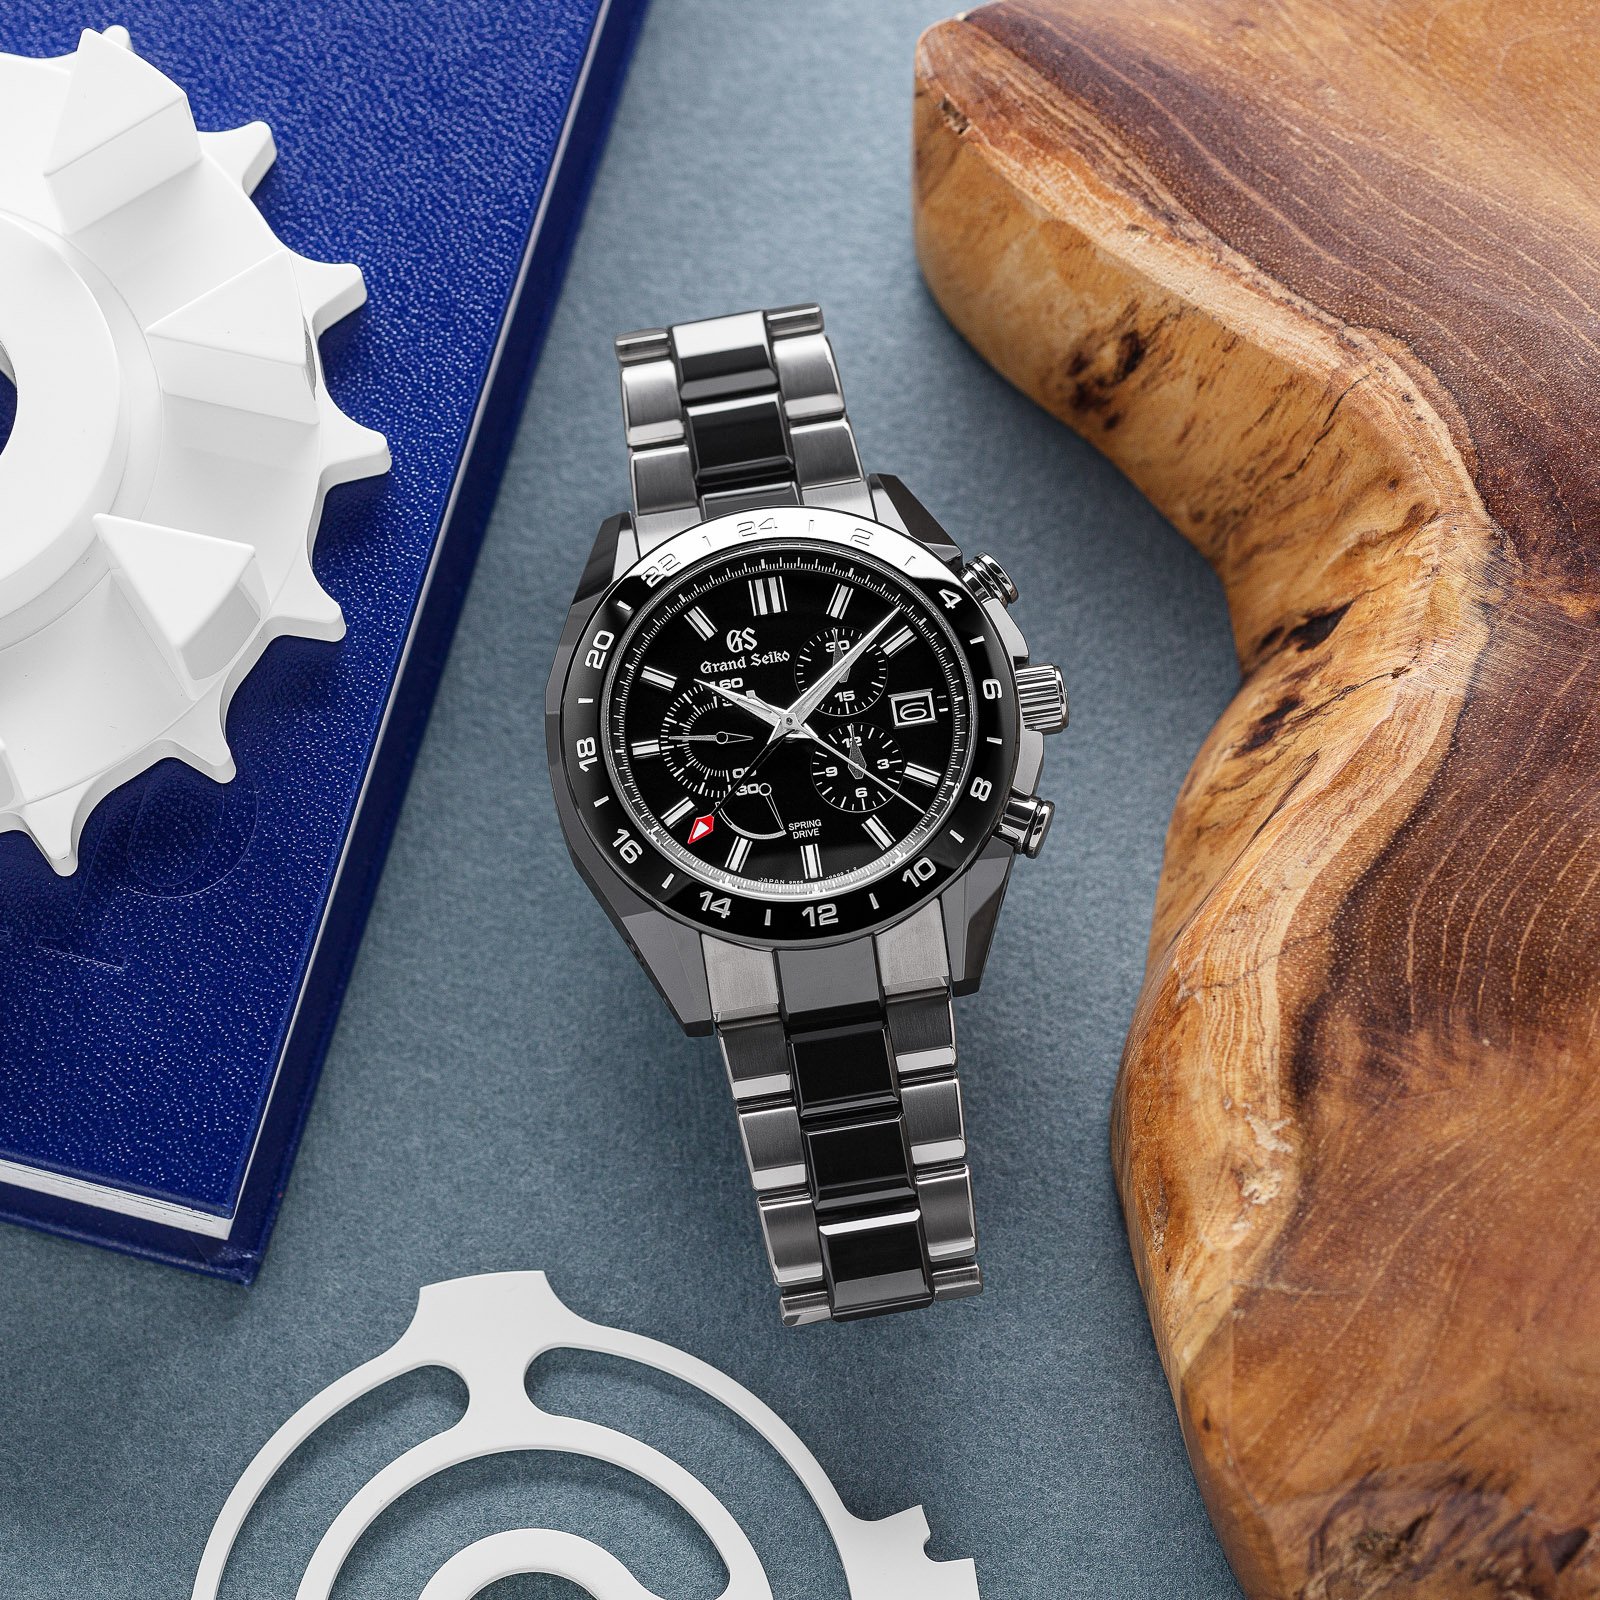 Grand Seiko SBGC223 Chronograph - black dial wristwatch with a titanium and ceramic case. 